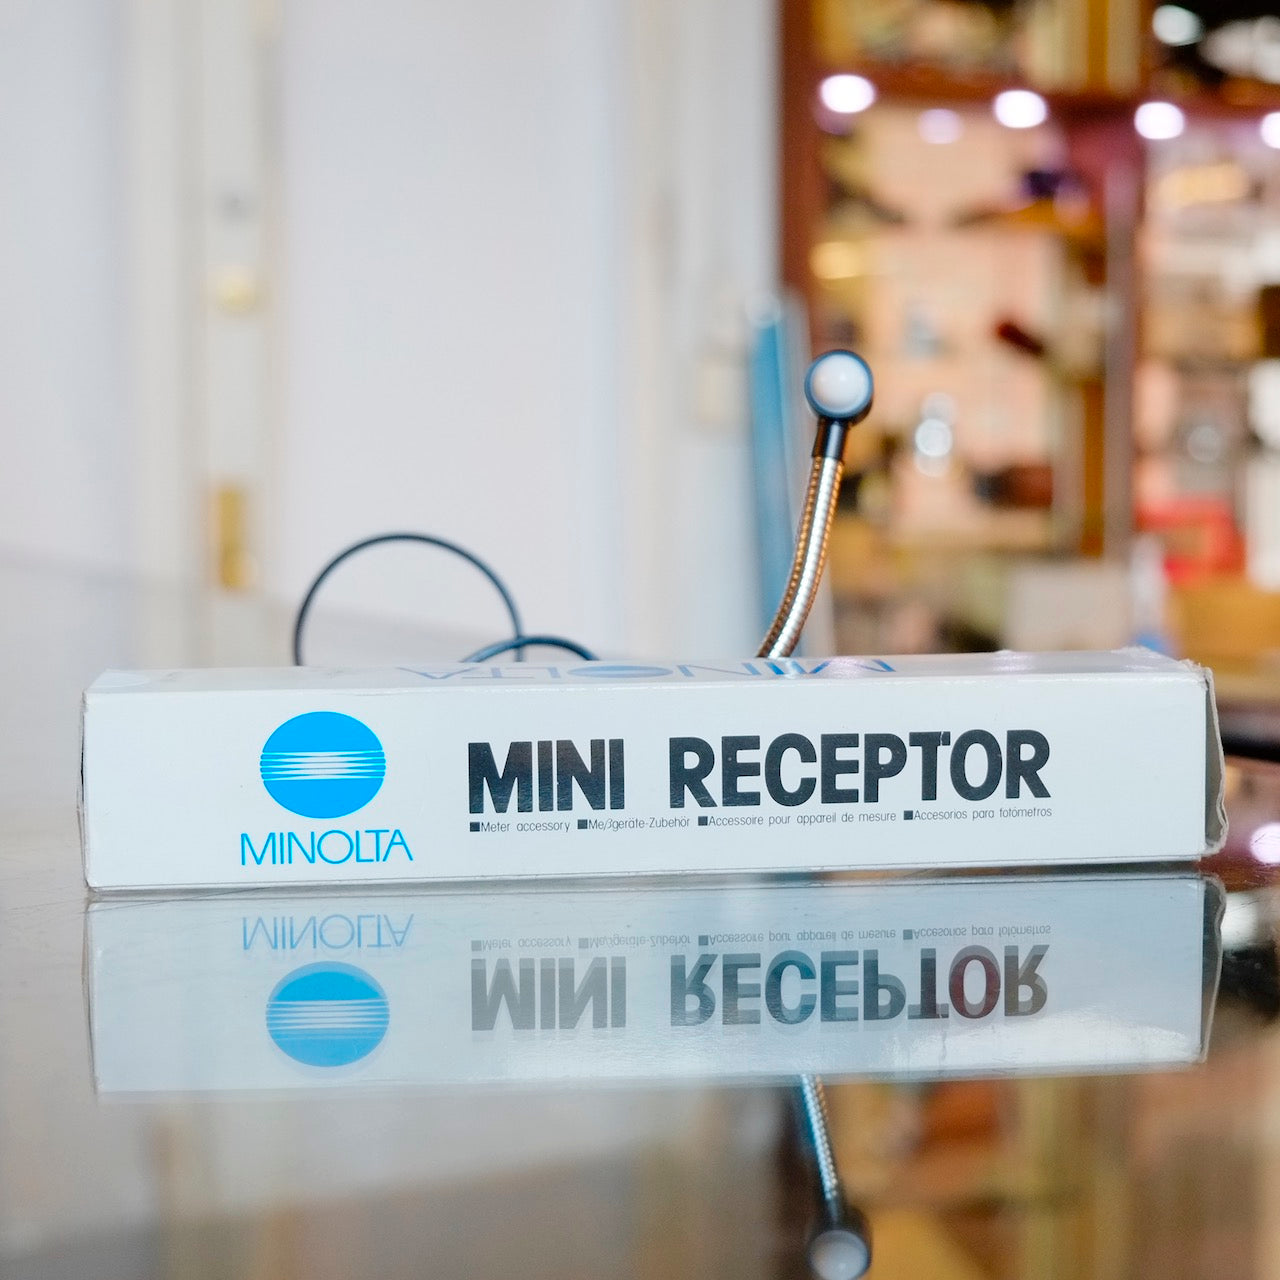 Minolta Mini Receptor